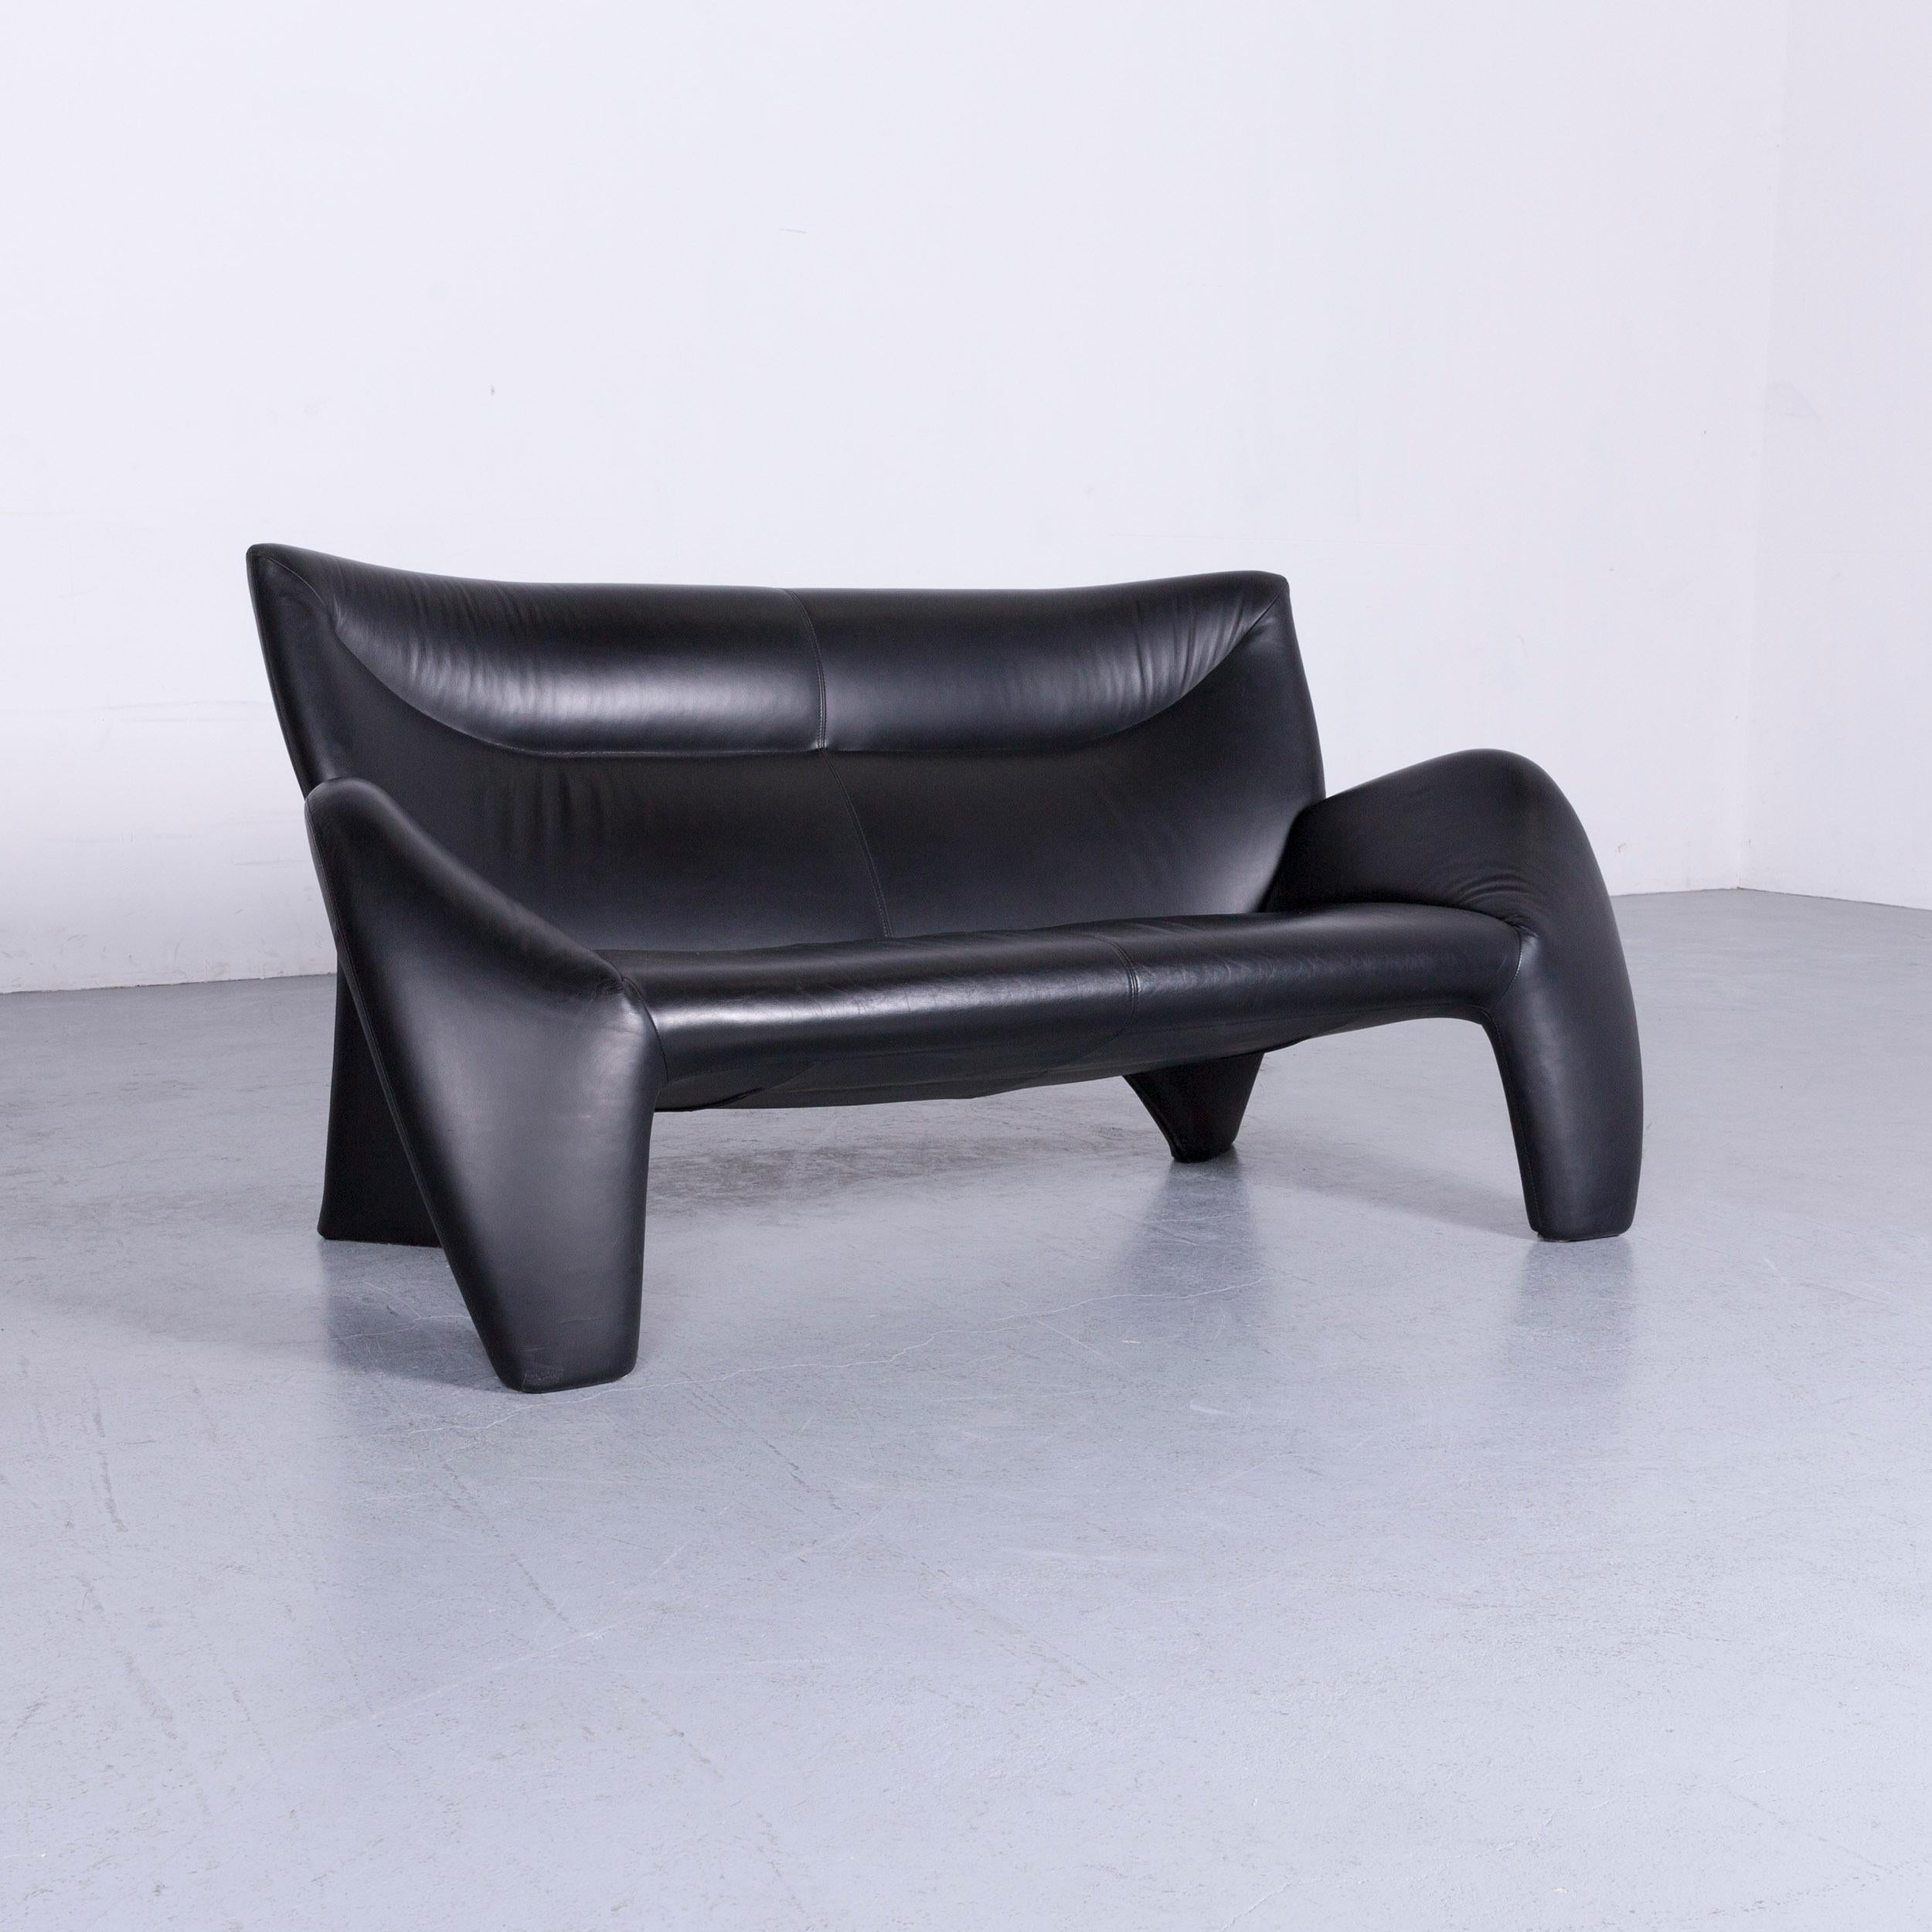 Black colored original Leolux Echnaton designer leather sofa, in a minimalistic and modern design, made for pure comfort and style.